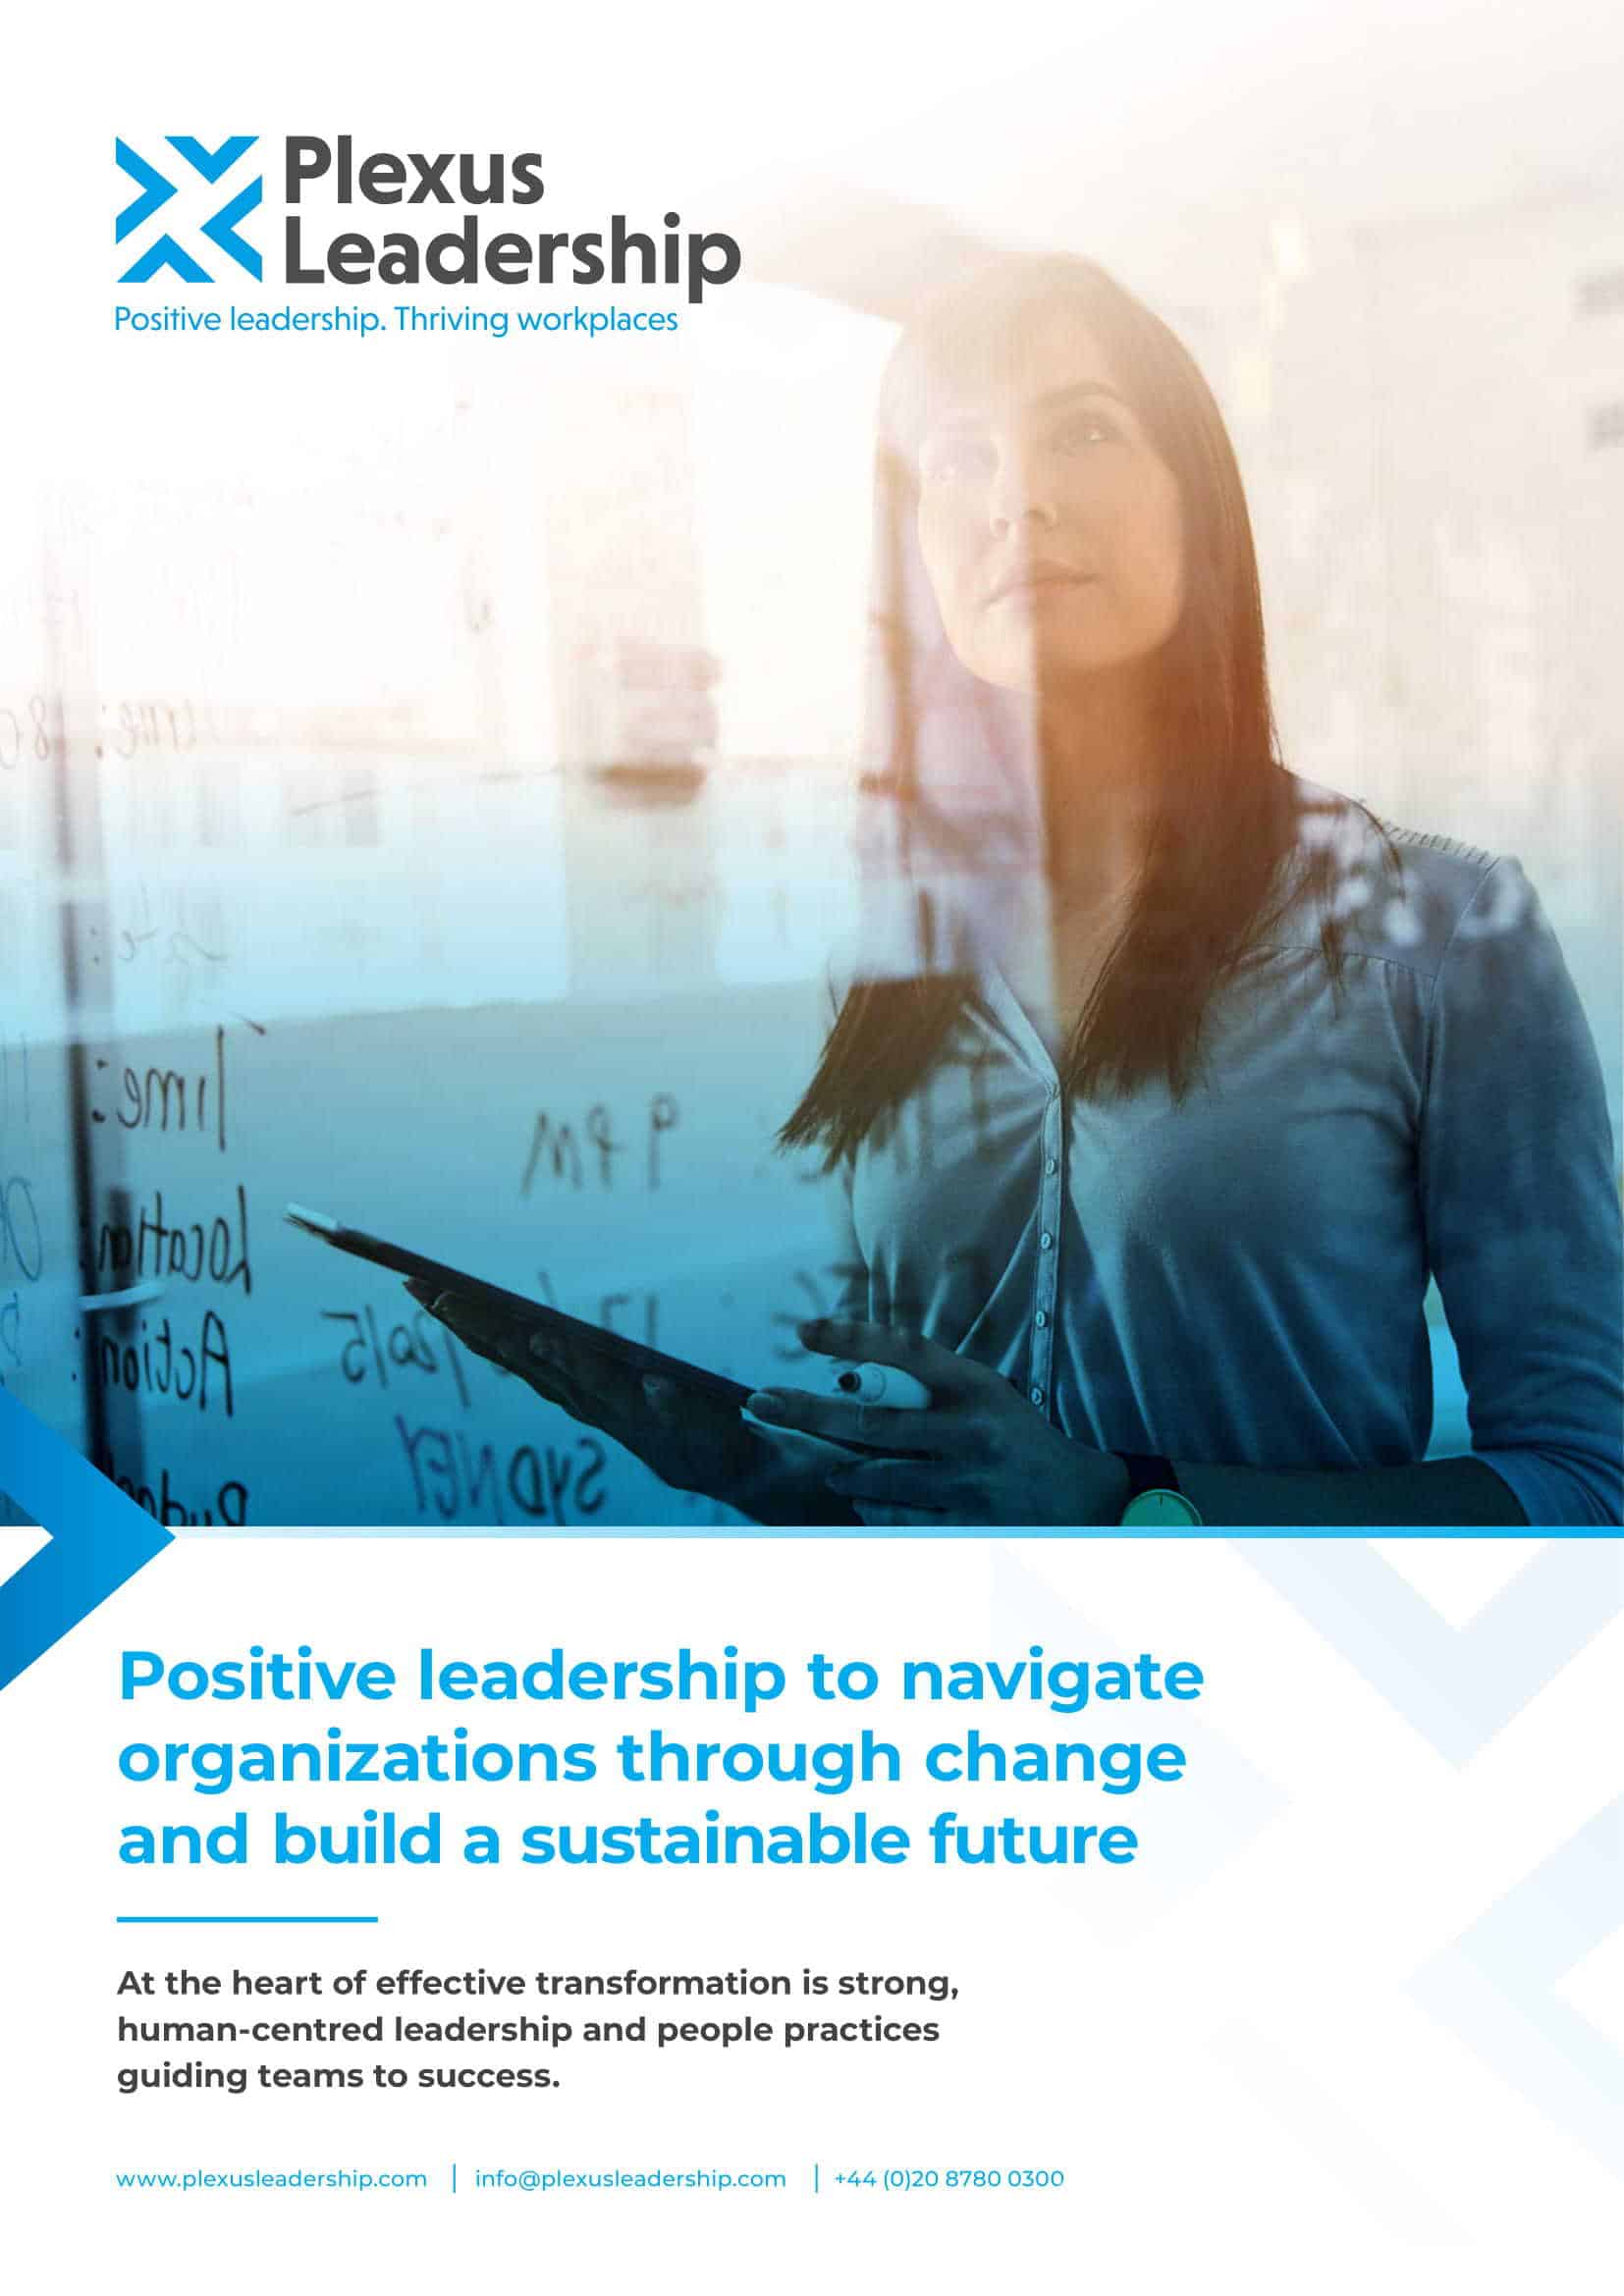 Plexus Leadership Positive Leadership White Paper 01 - Insights